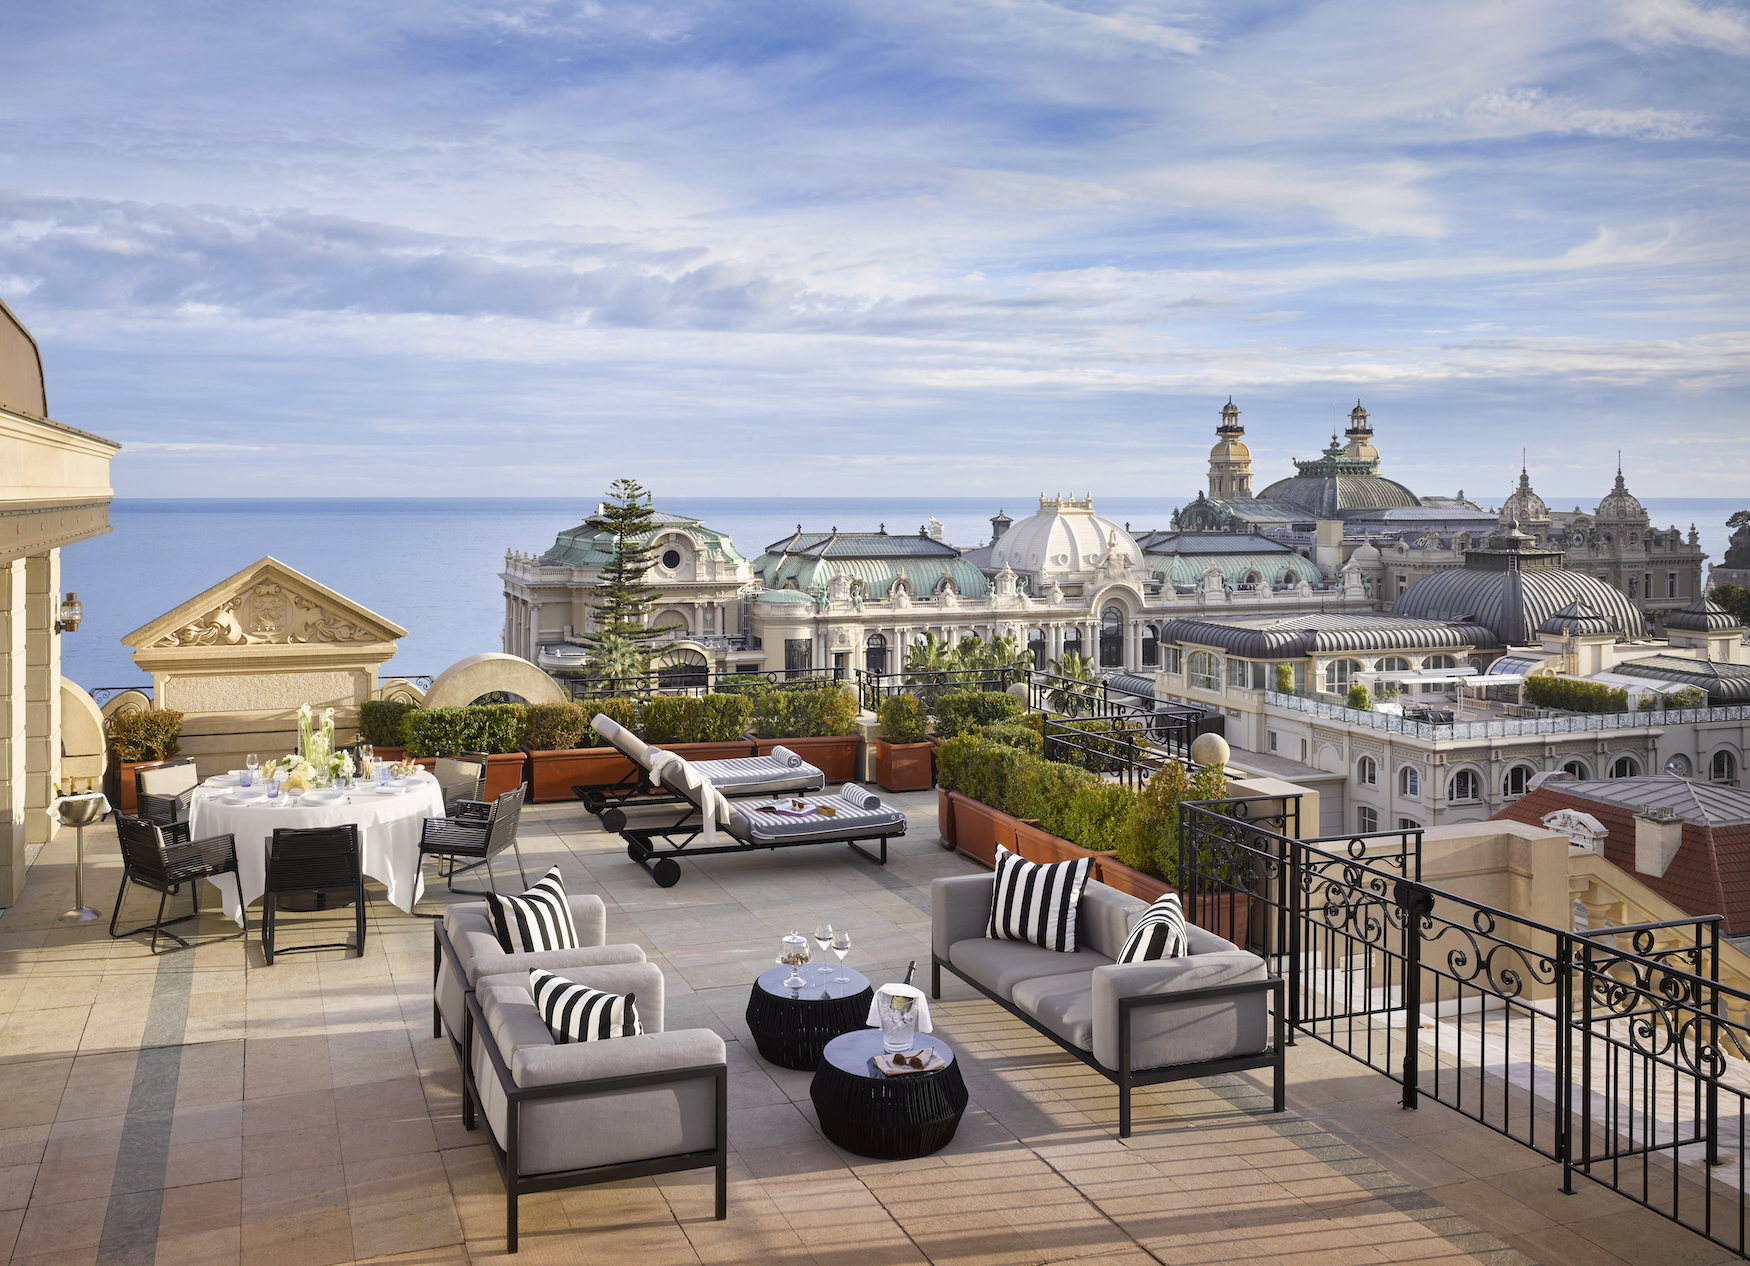 Terrasse der Carre d'Or Suite im Hotel Metropole in Monaco